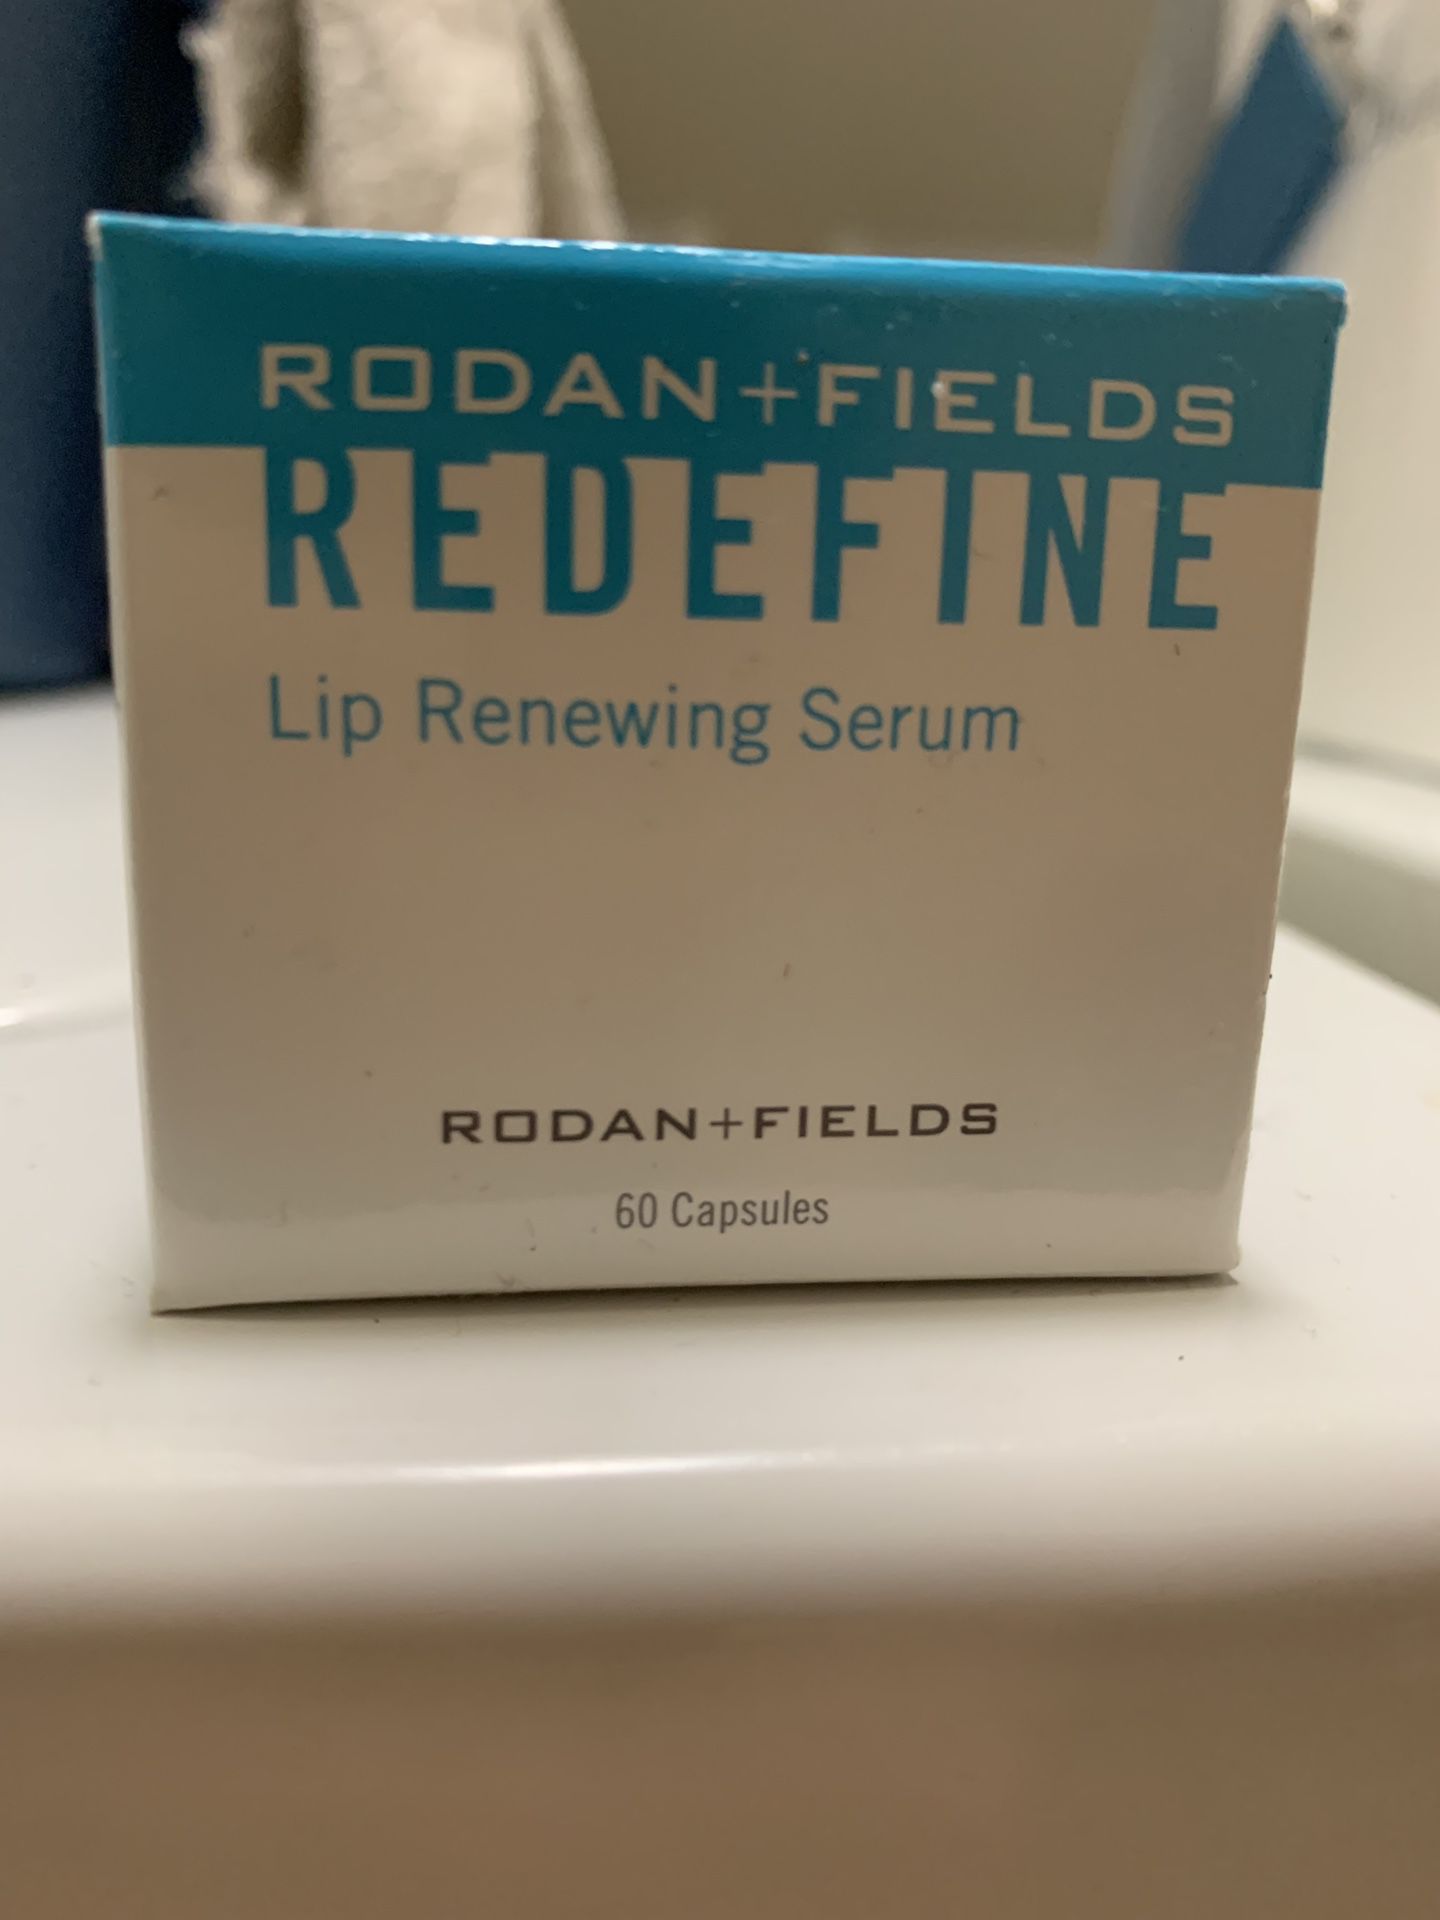 Lip renewing serum